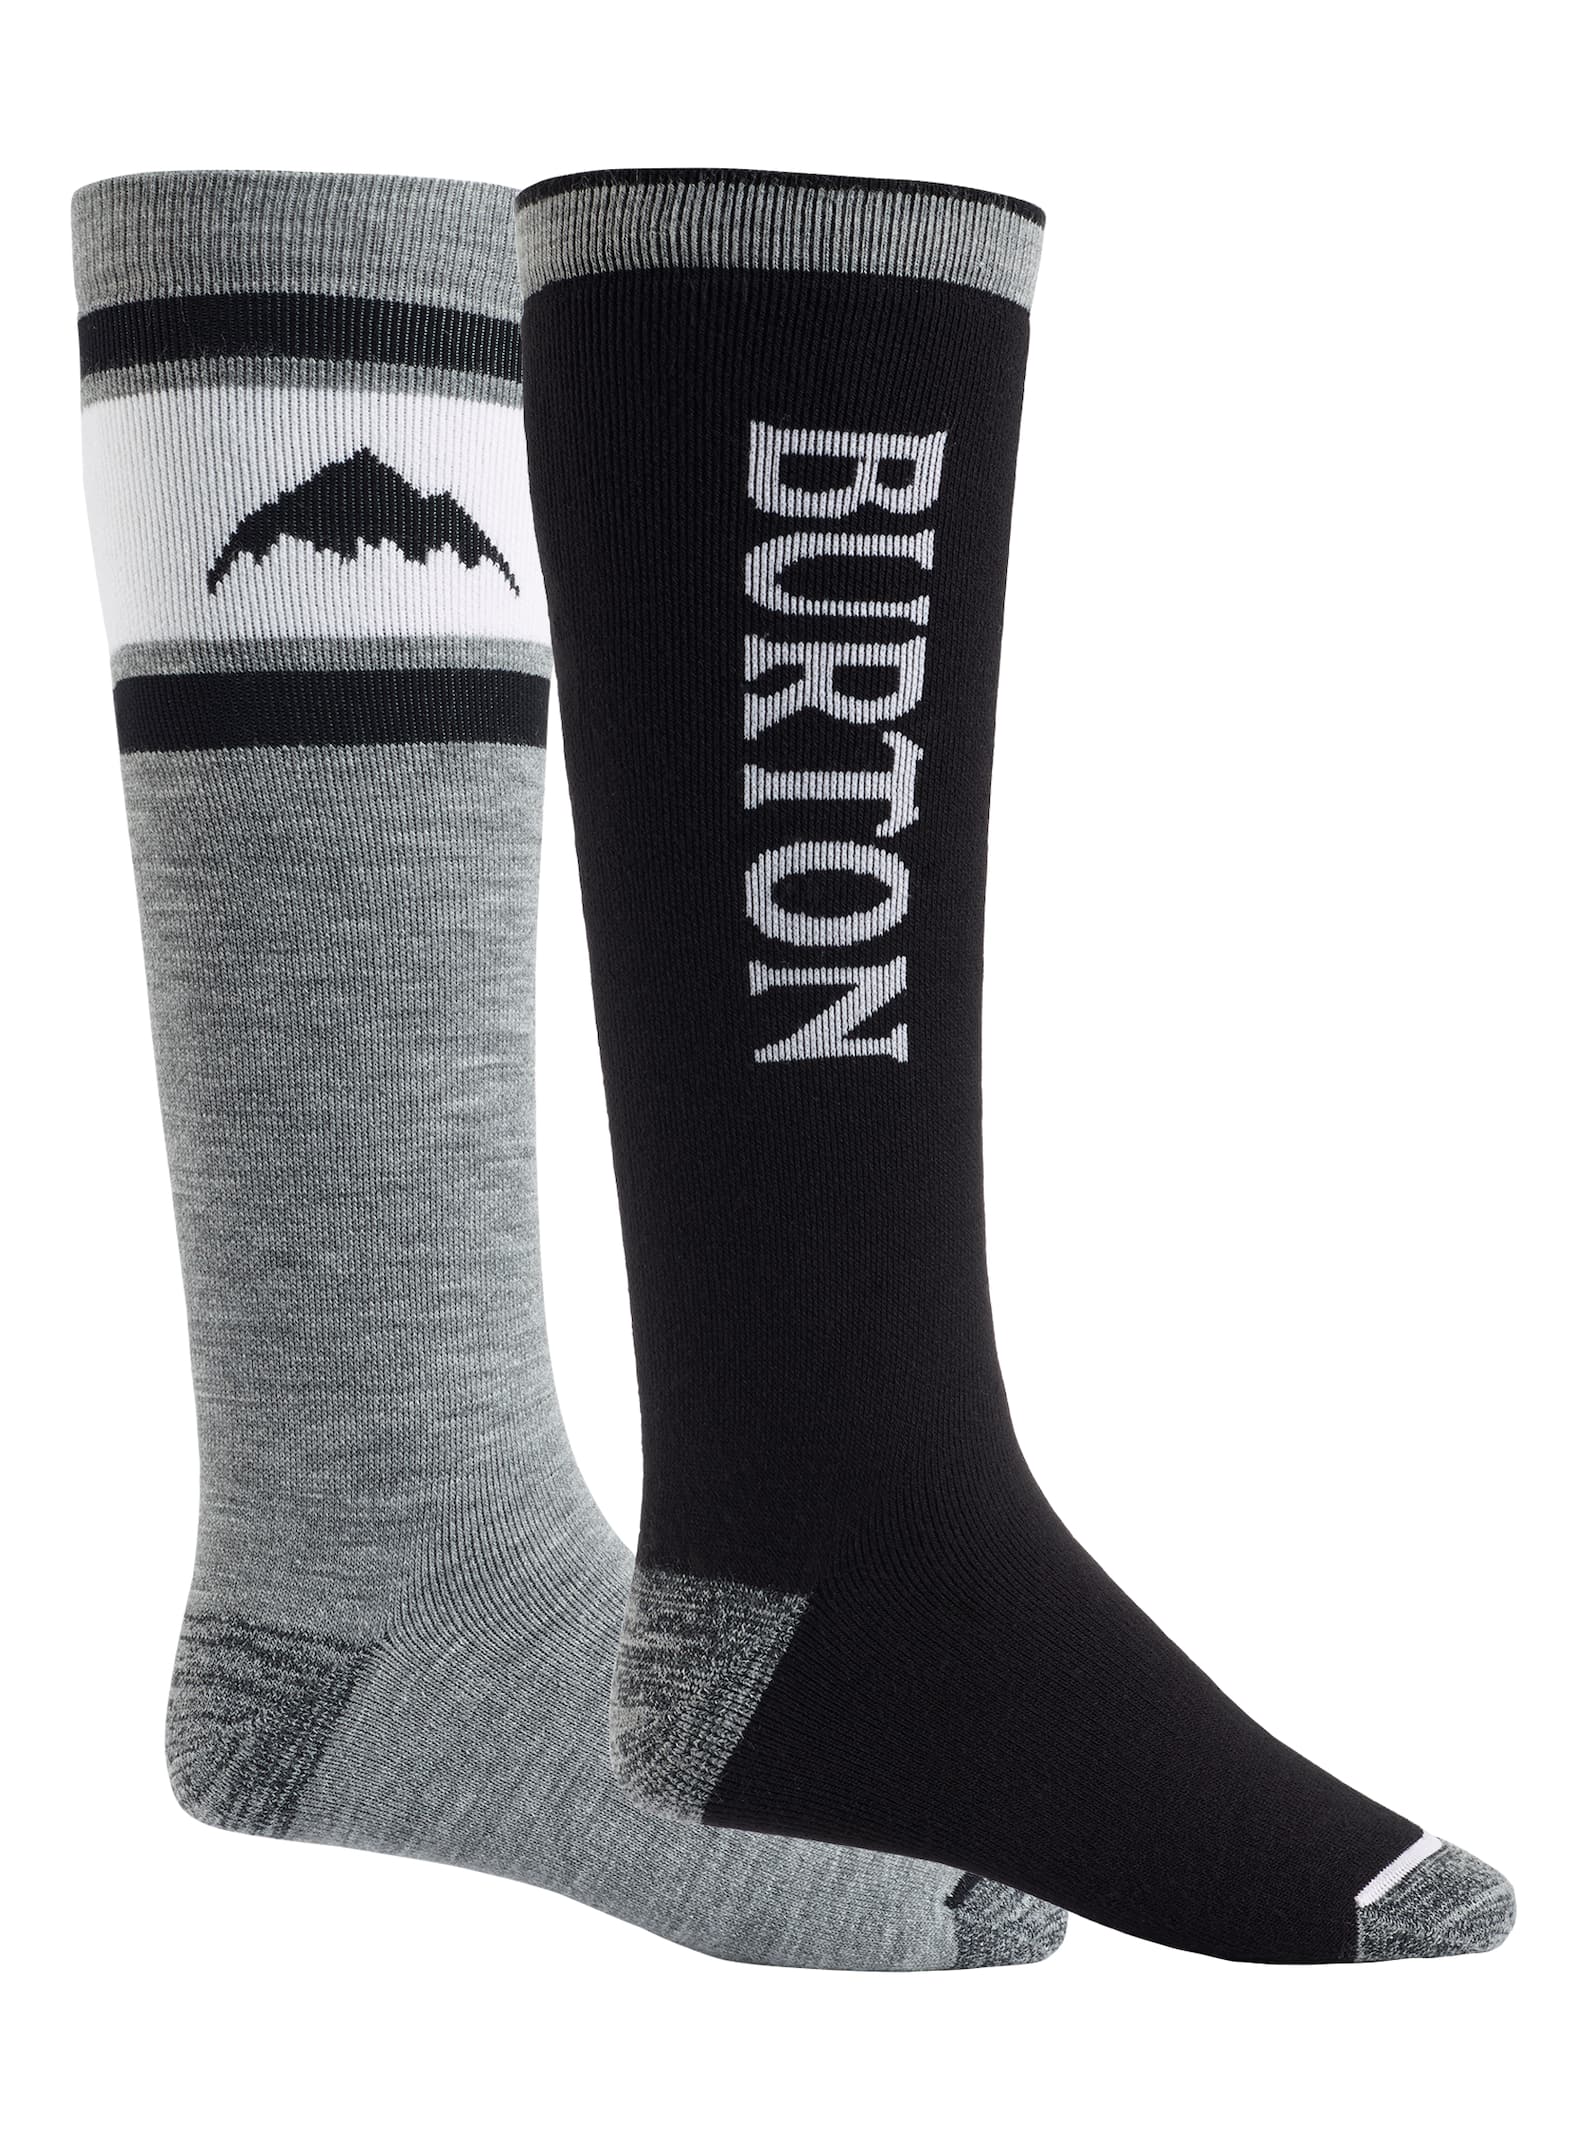 burton snowboard socks